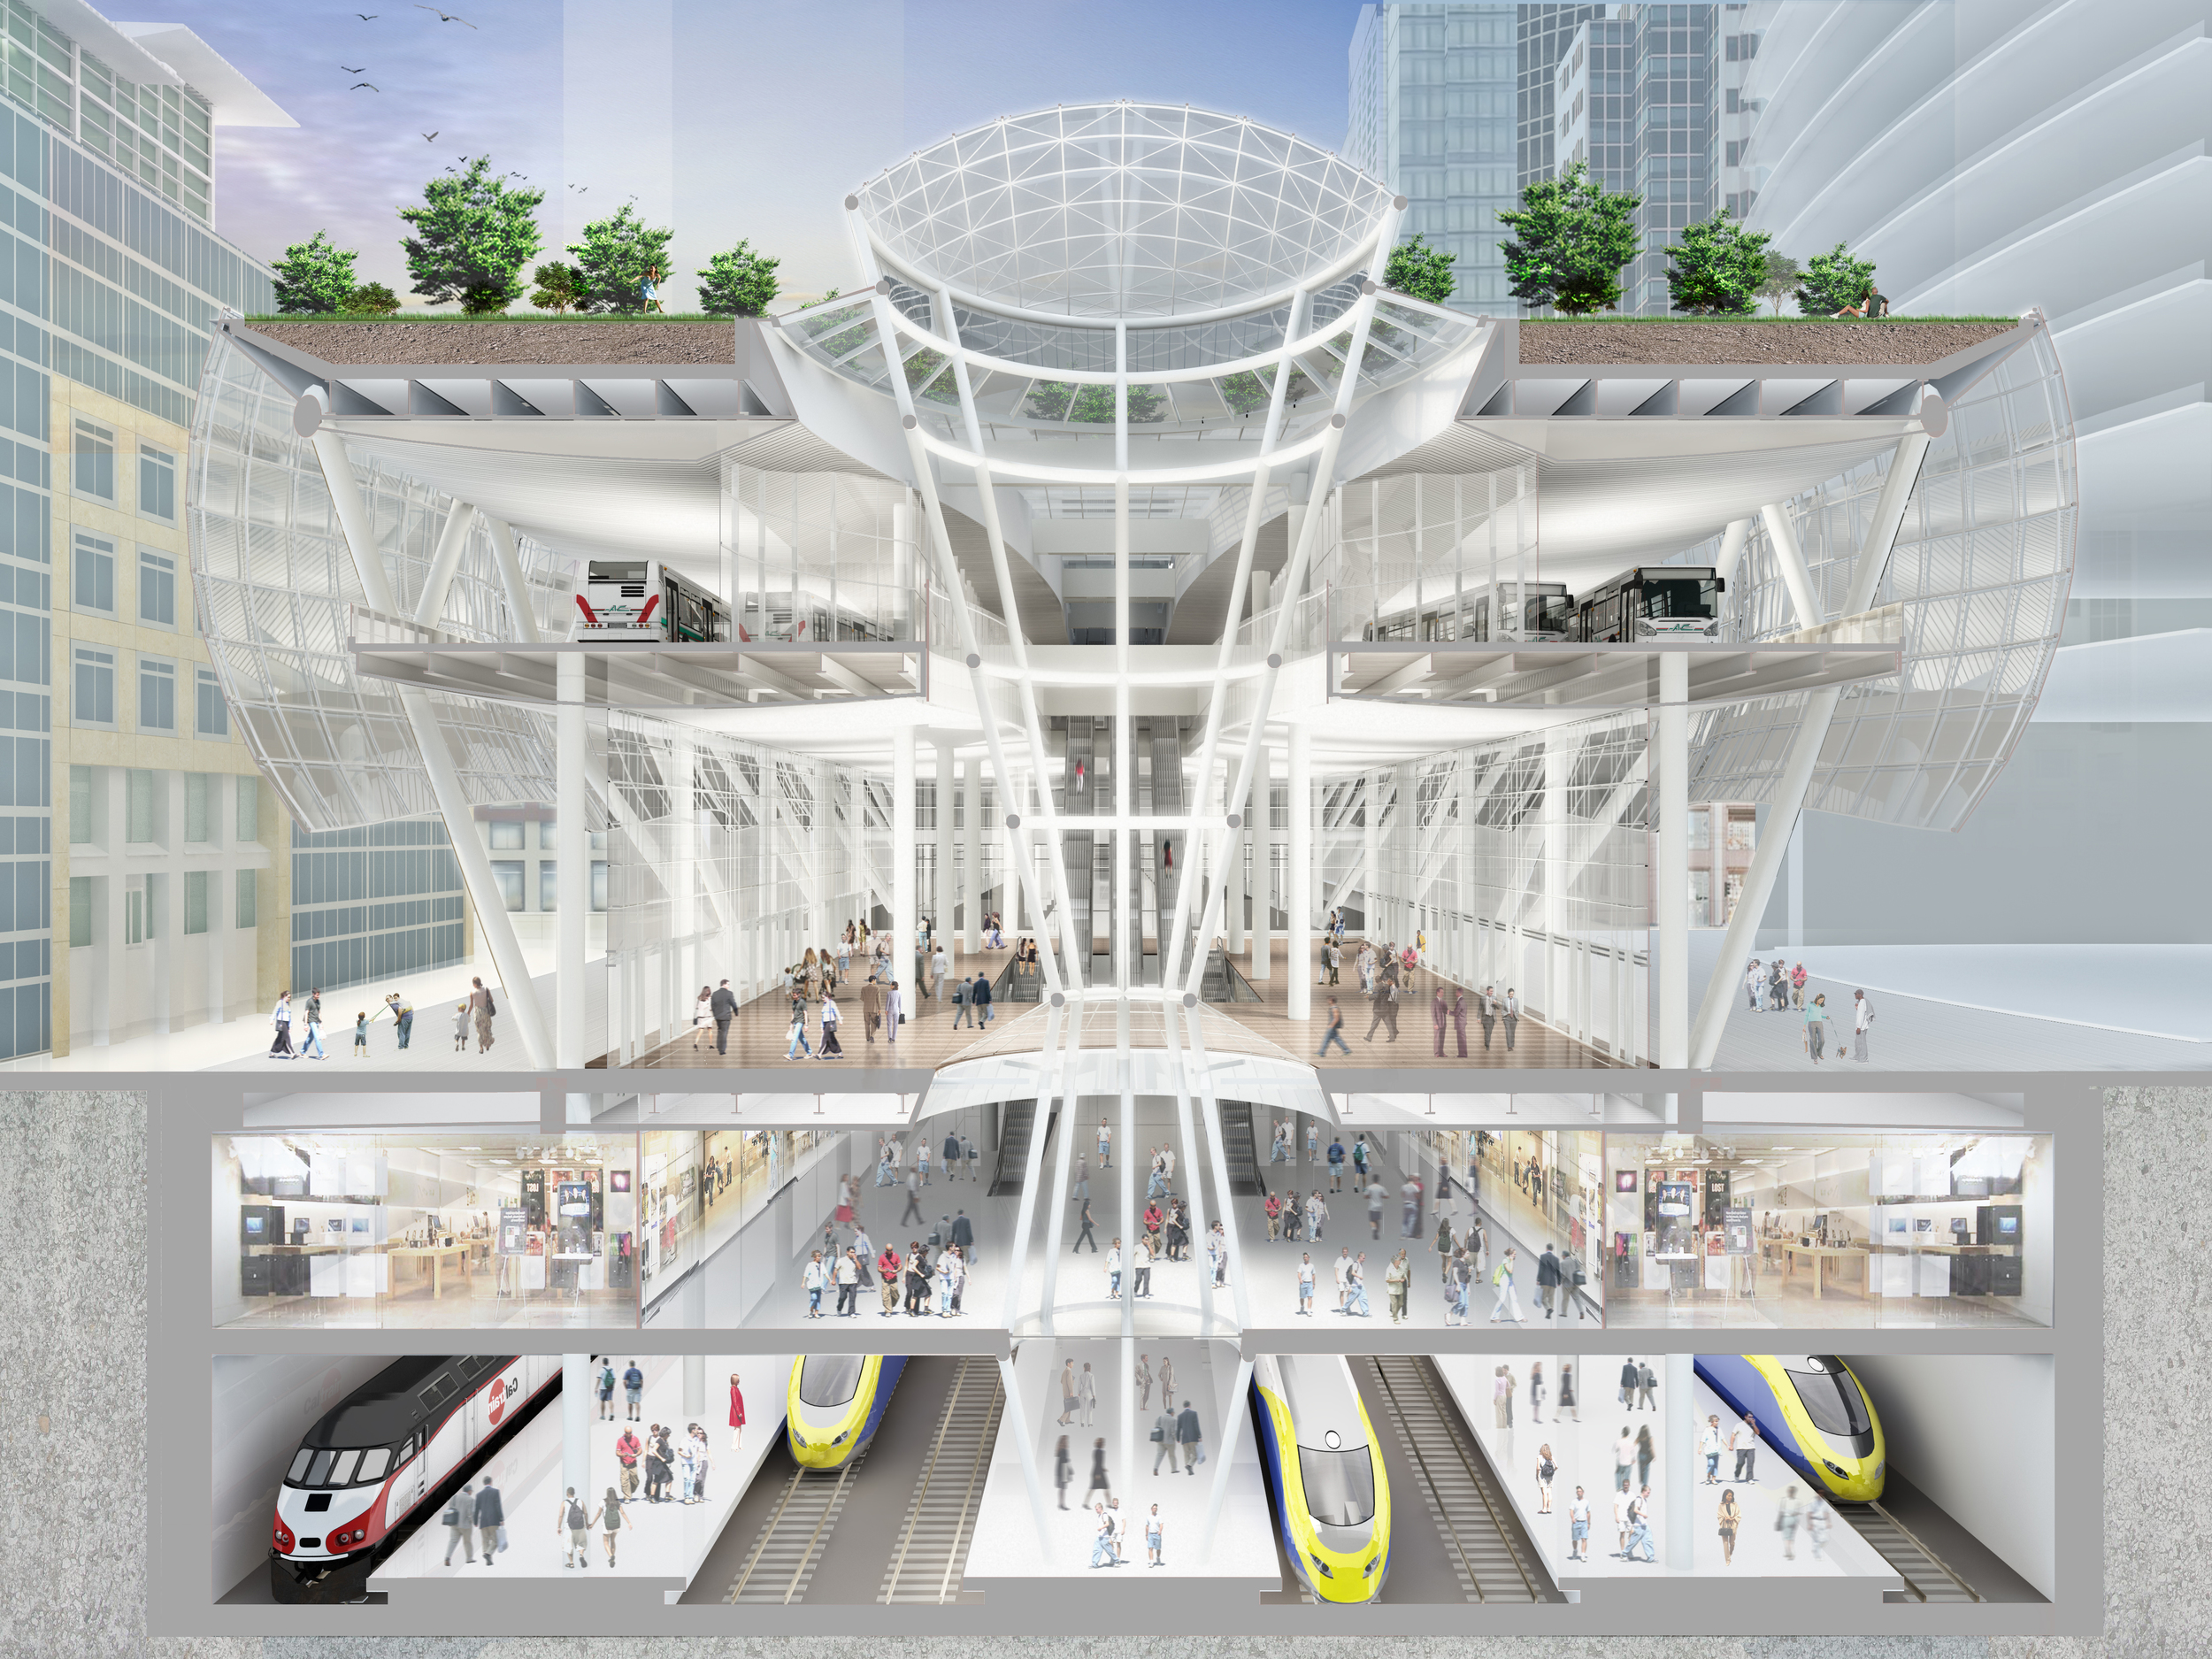 Architecture projects. Transbay Transit Center. Сан Франциско центр Трансбэй. Станция метрополитена Экспо Сингапур. Сезар Пелли Архитектор.